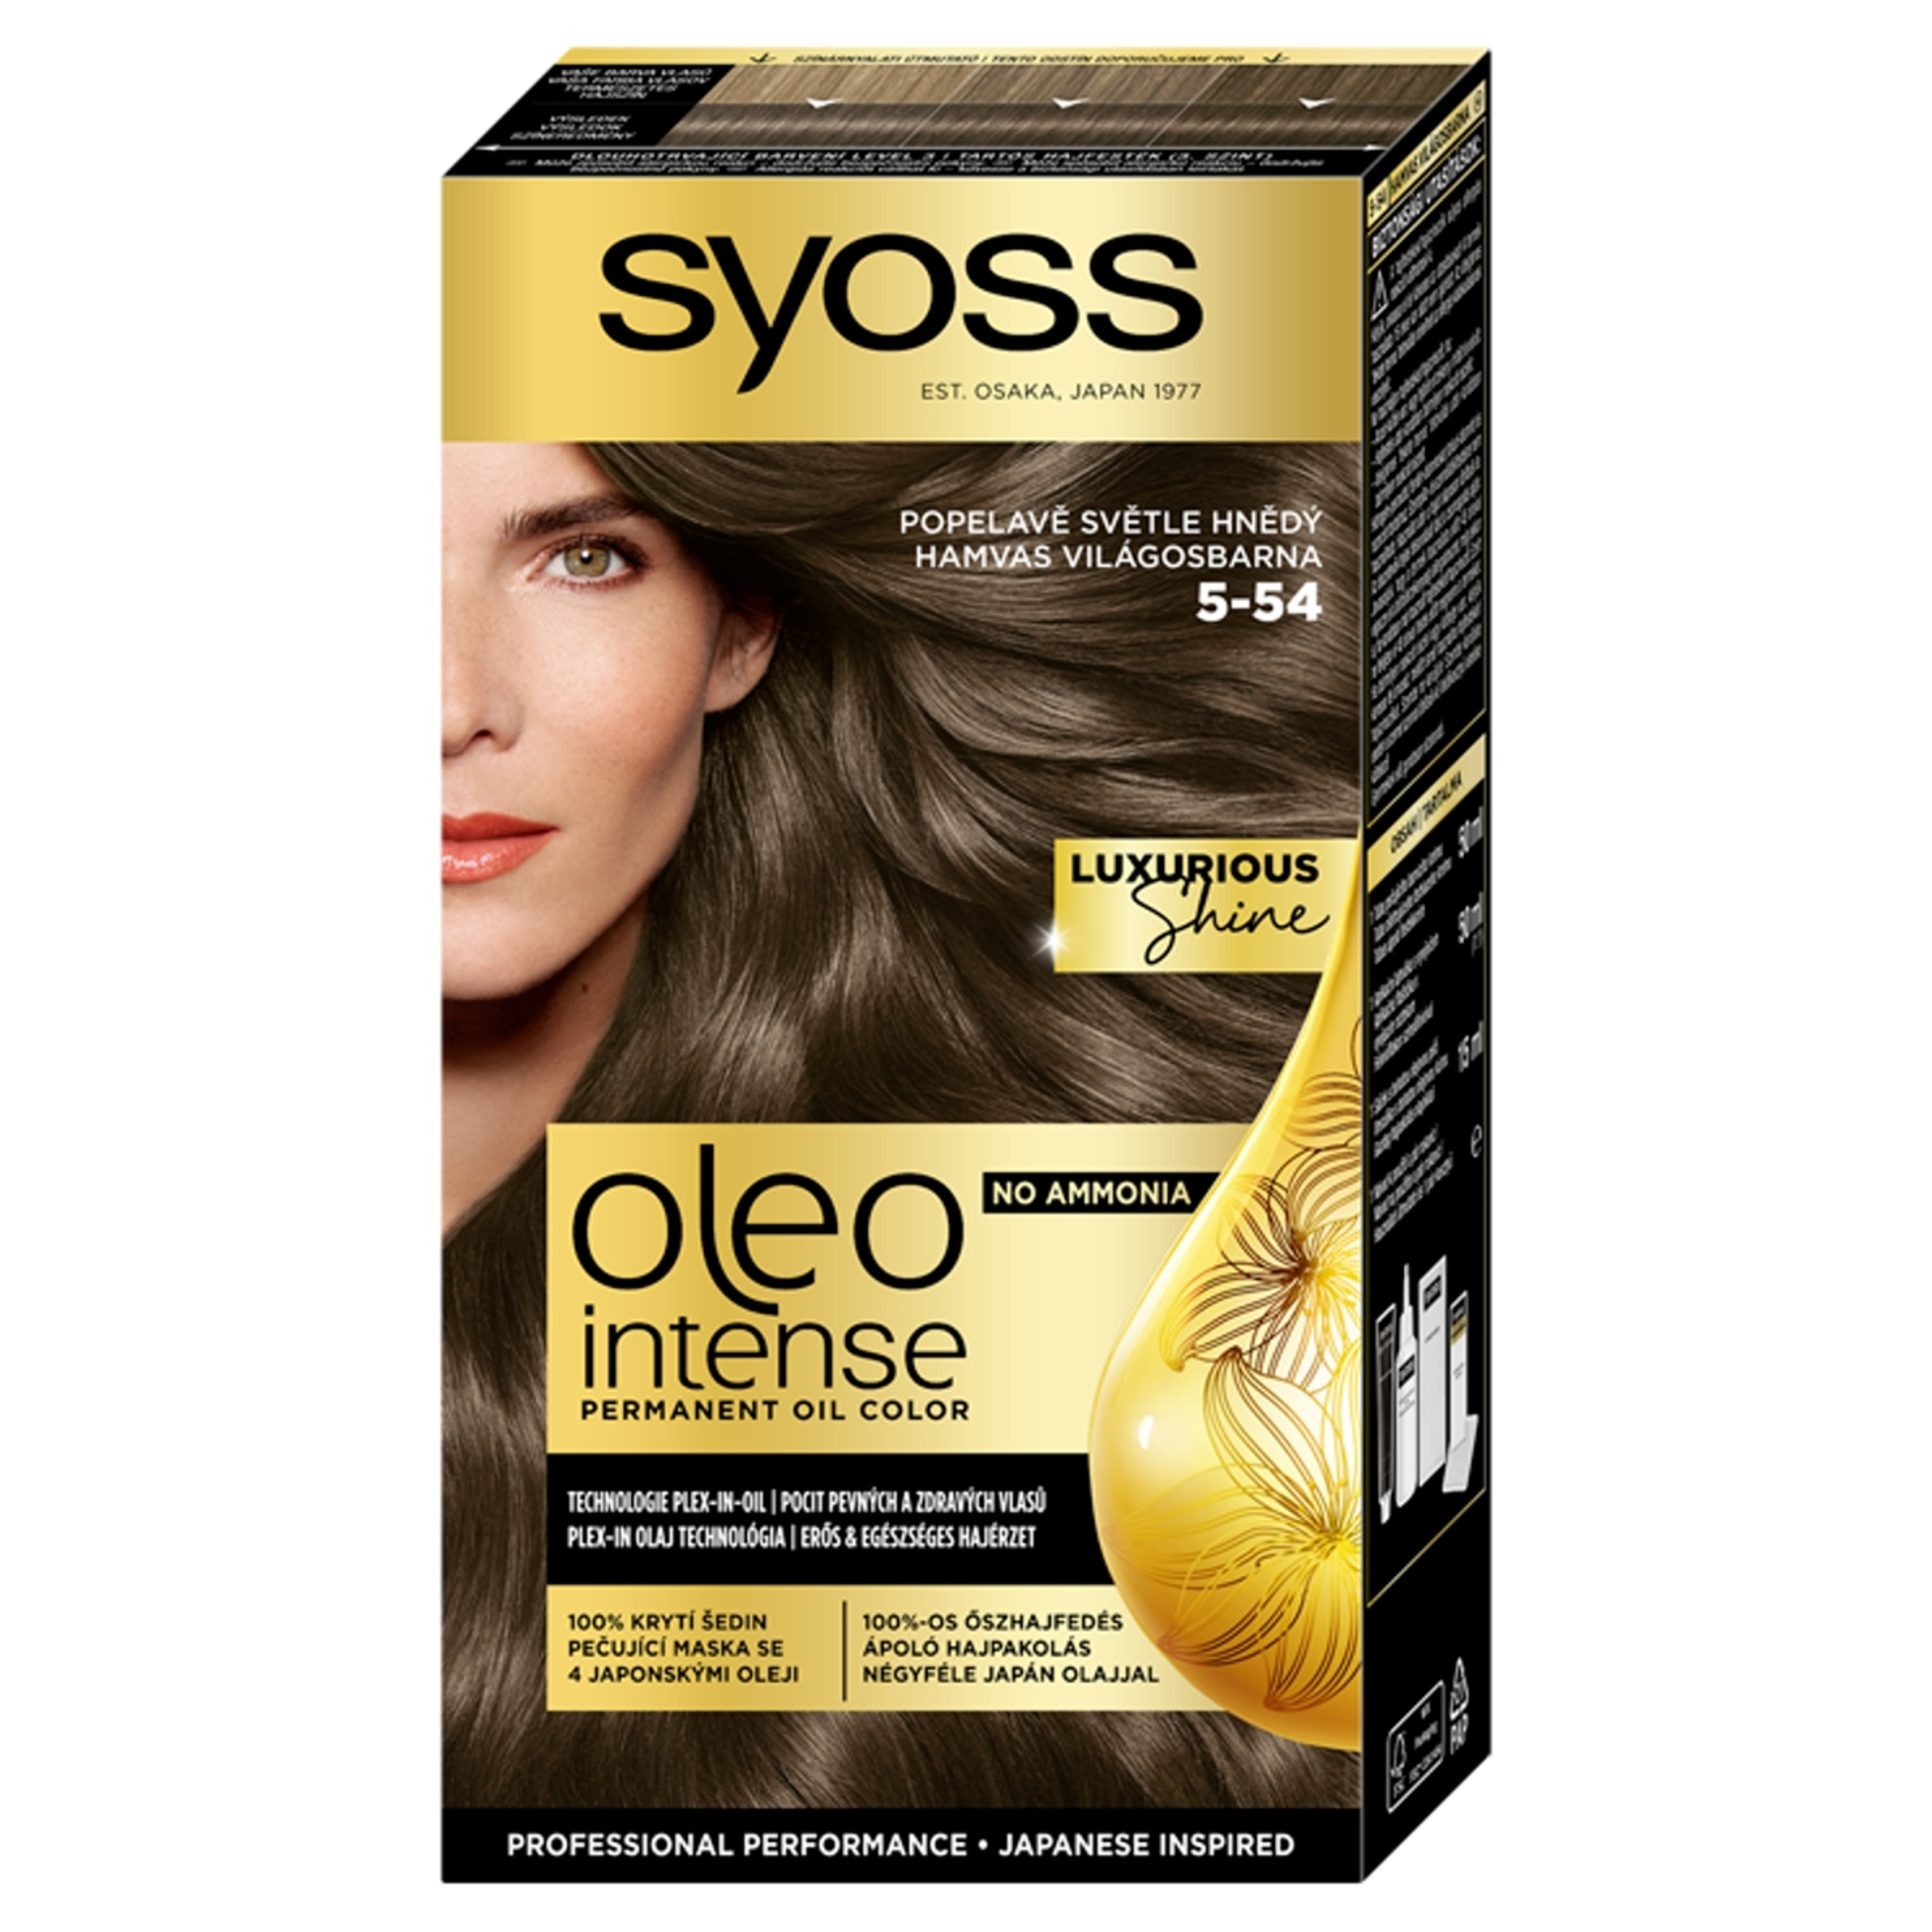 Syoss Oleo Intense tartós hajfesték 5-54 hamvas világos barna - 1 db-1